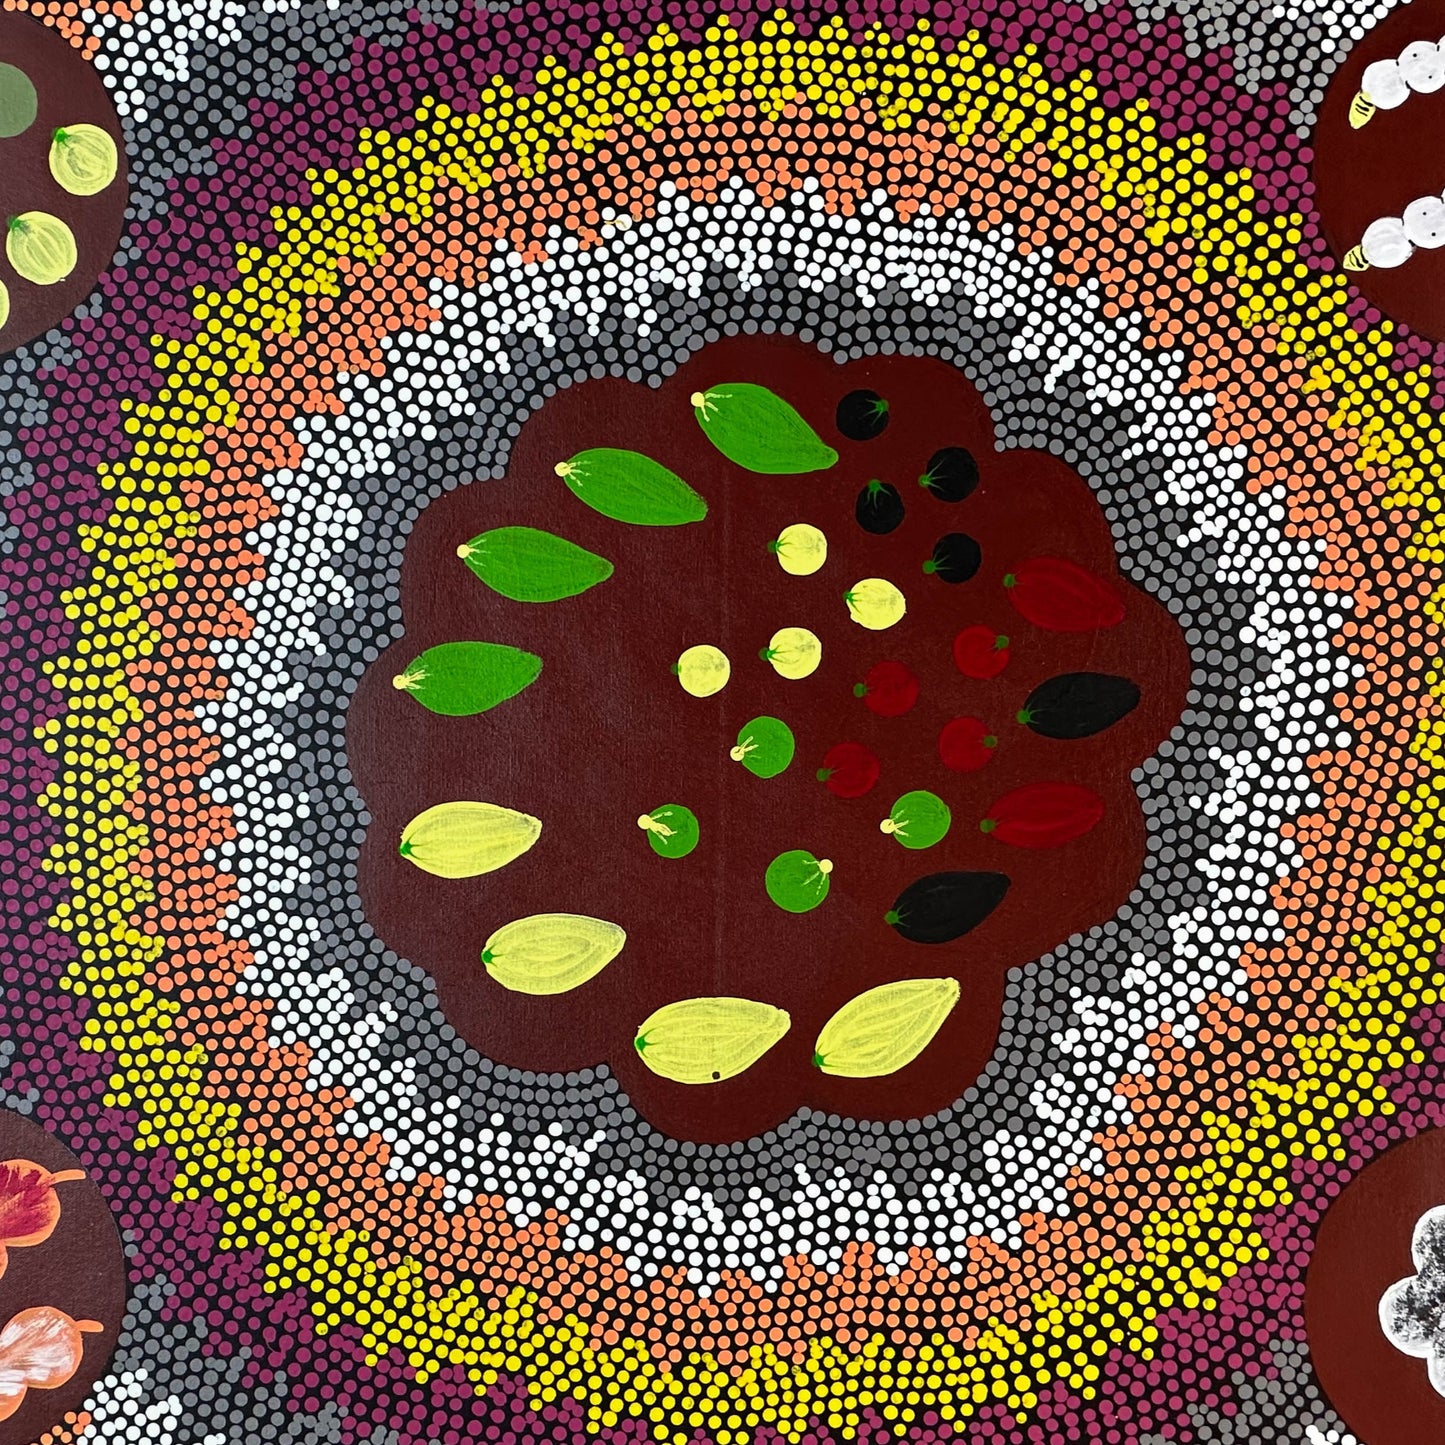 Bush Tucker + bush tomatoes, bush berries, bush potato/yam, witchetty grubs, cotton wool + Mary Ross Nabarula + Willowra + Indigenous Art + Aboriginal Art + Australian Art + Dot Art Painting + Darwin Based Gallery + Bush Survival + traditional art 